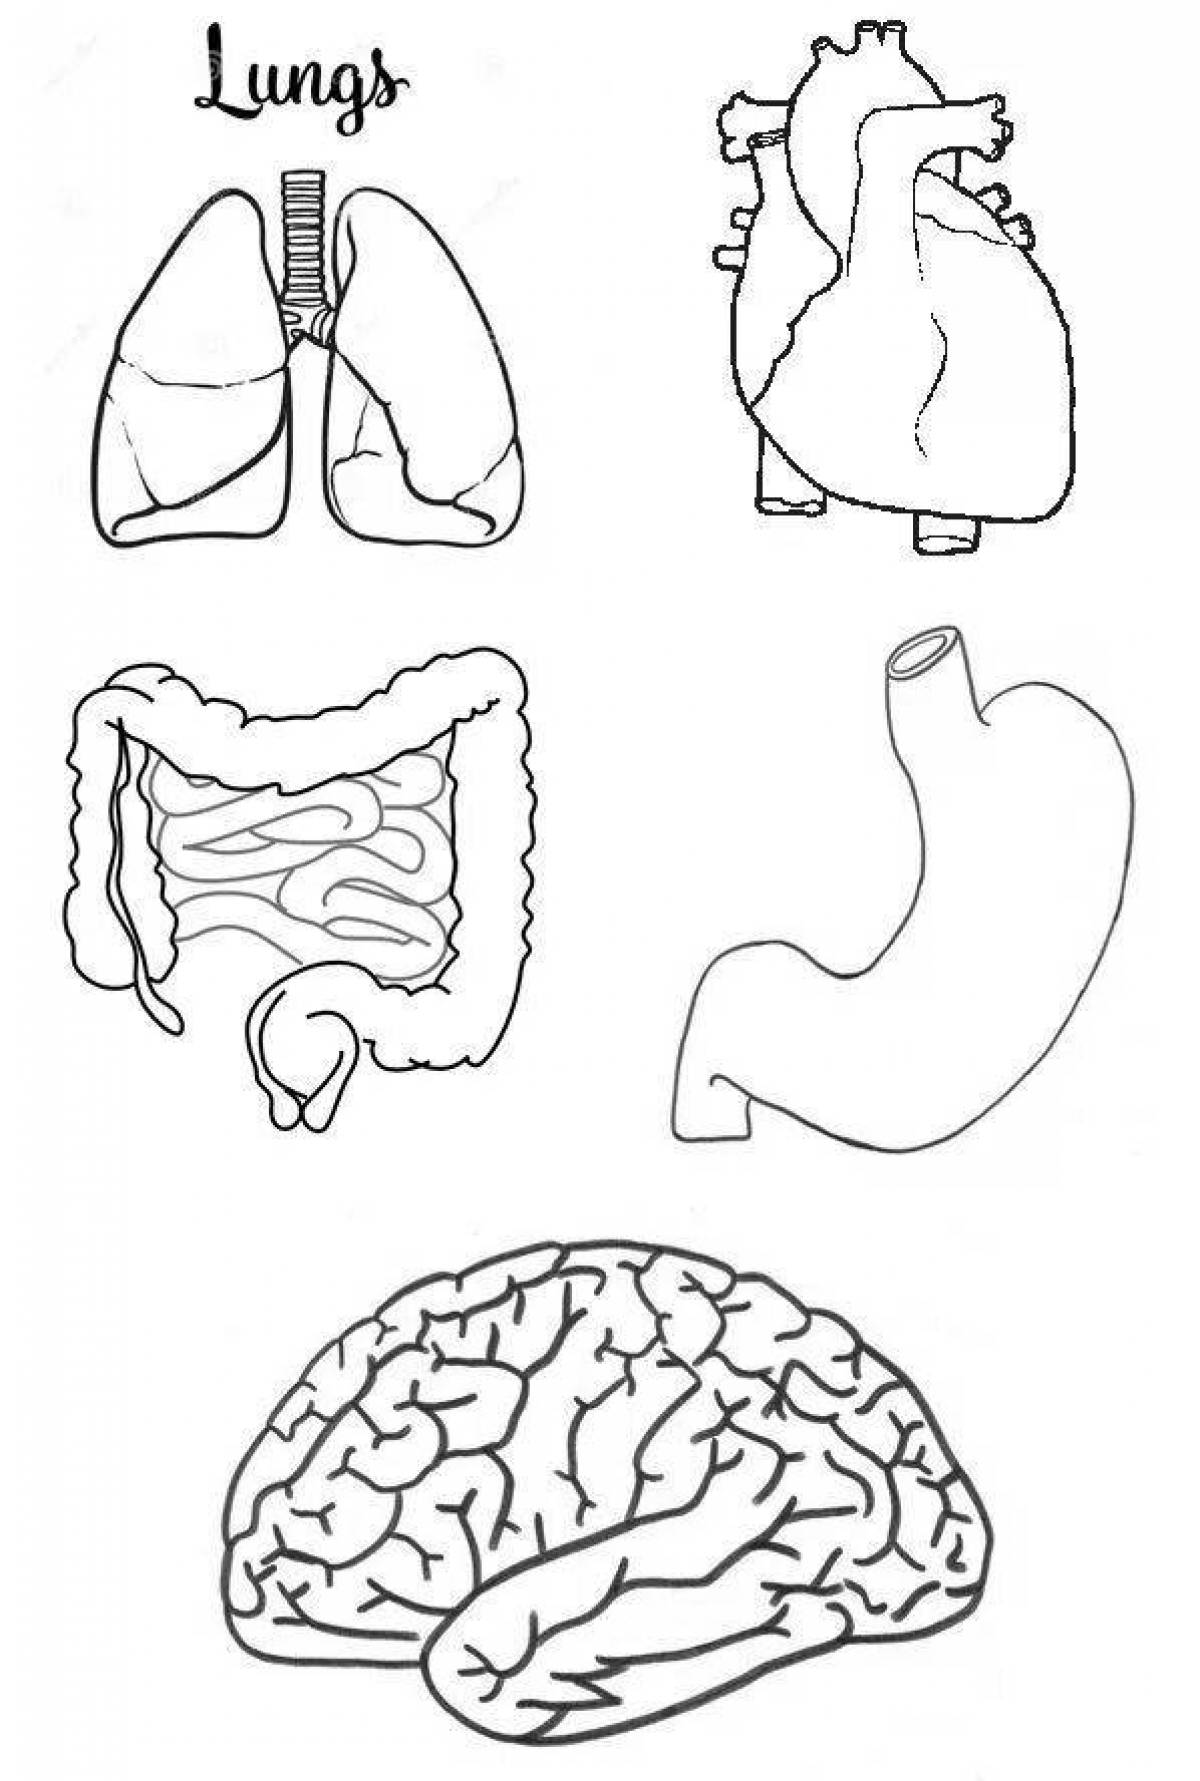 Vivacious coloring page структура человеческого тела